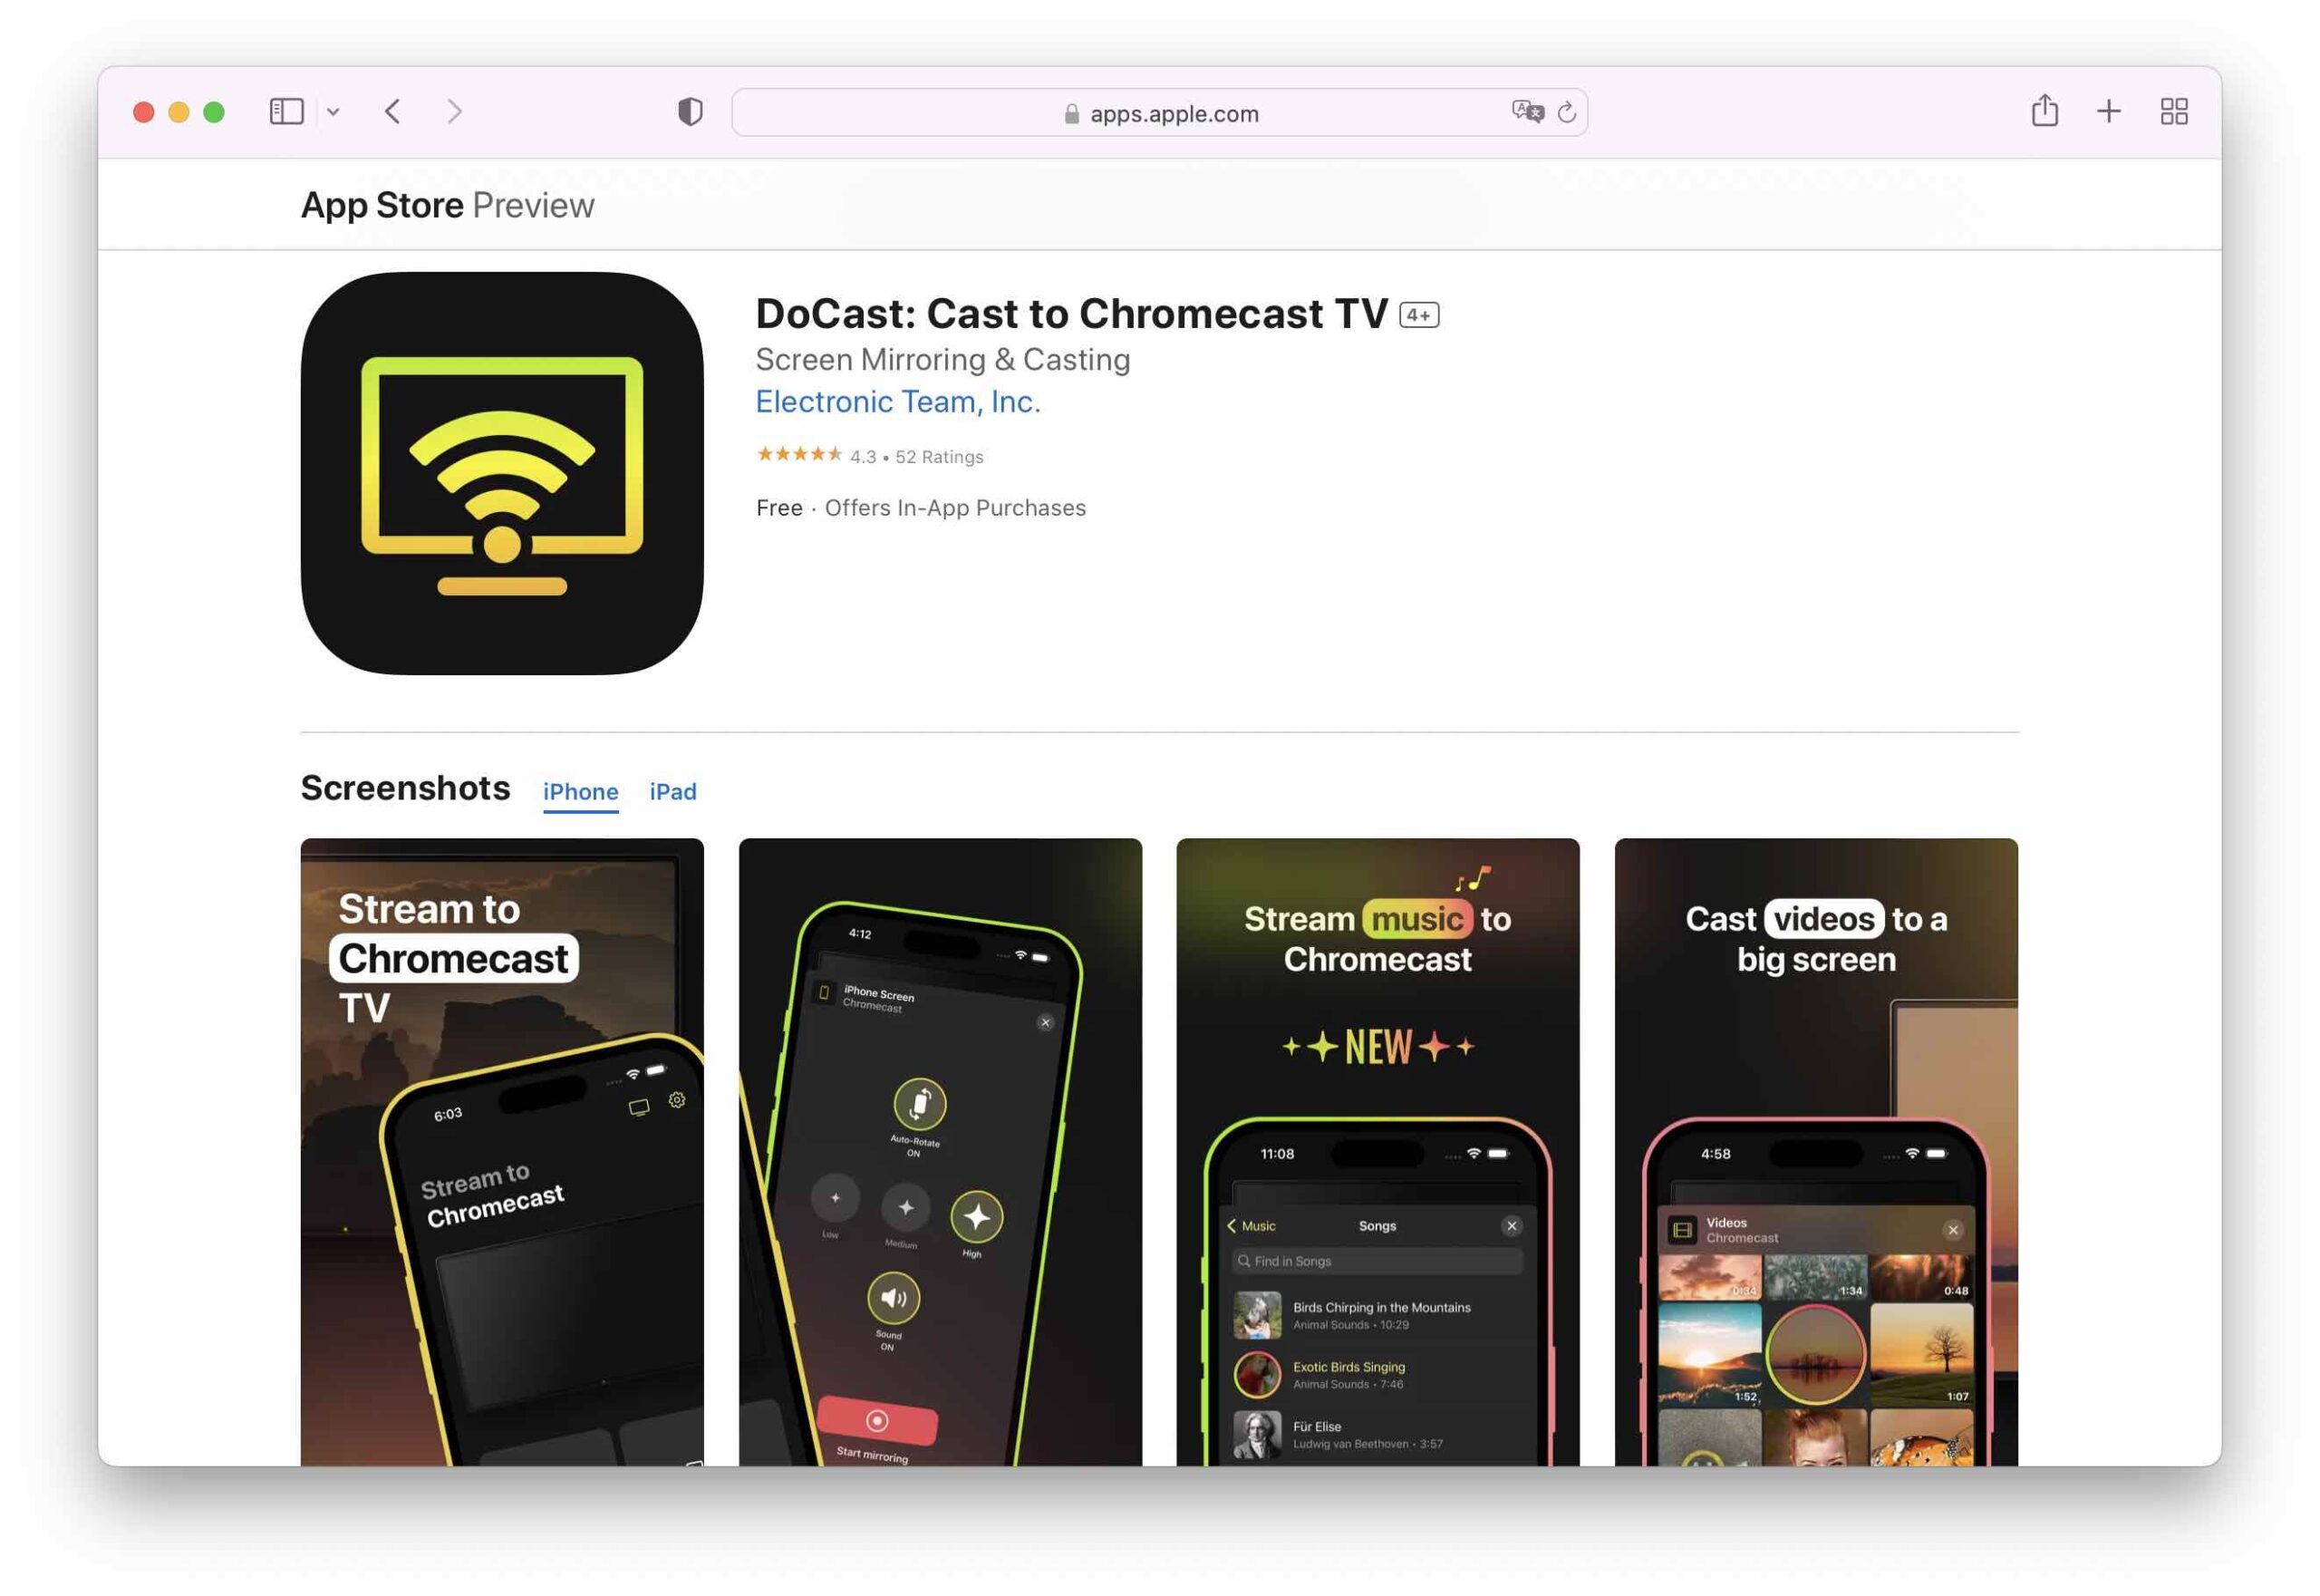 The DoCast app Mac App Store screenshot